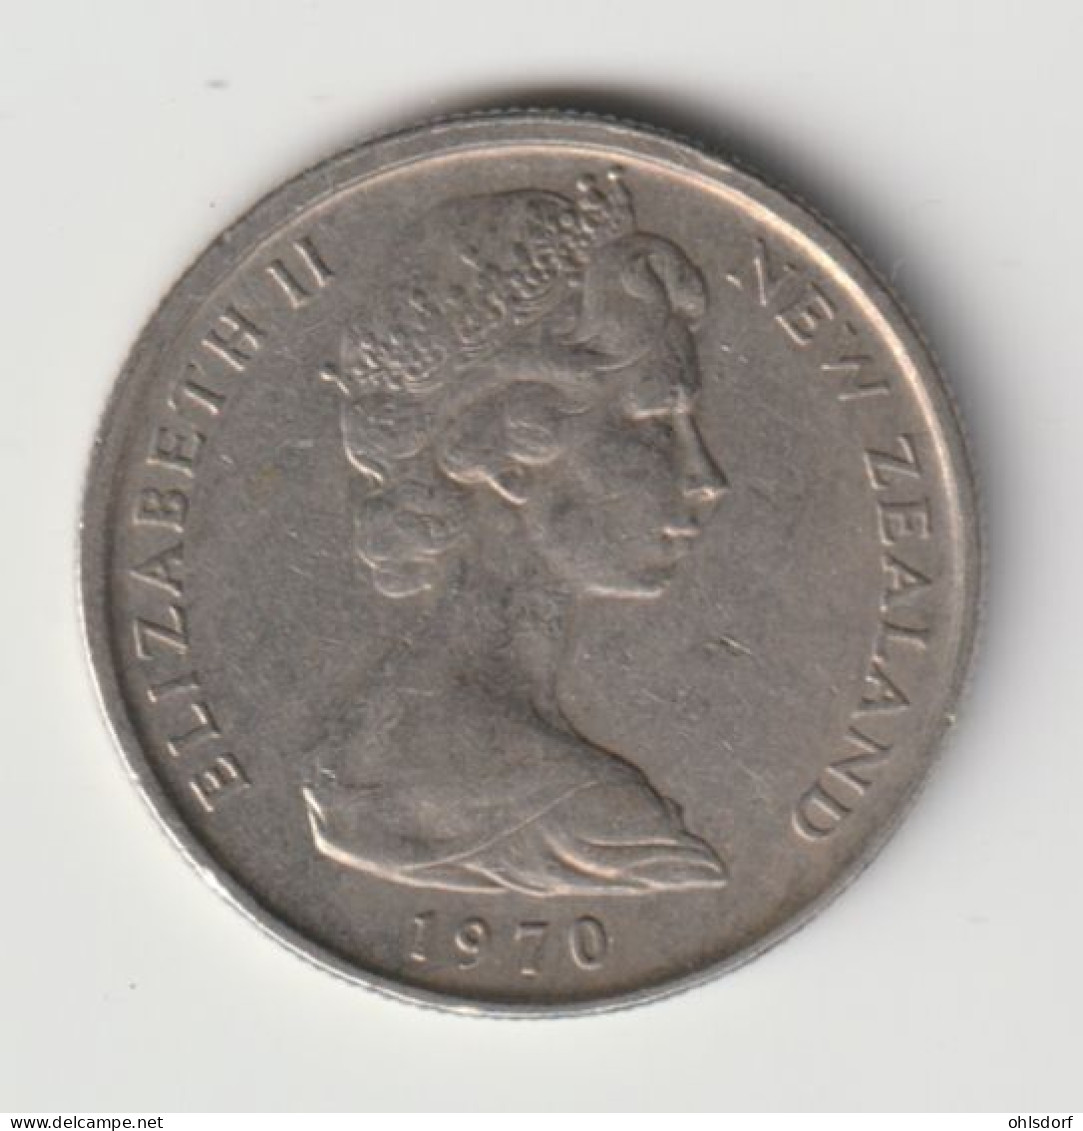 NEW ZEALAND 1970: 5 Cents, KM 34.1 - New Zealand